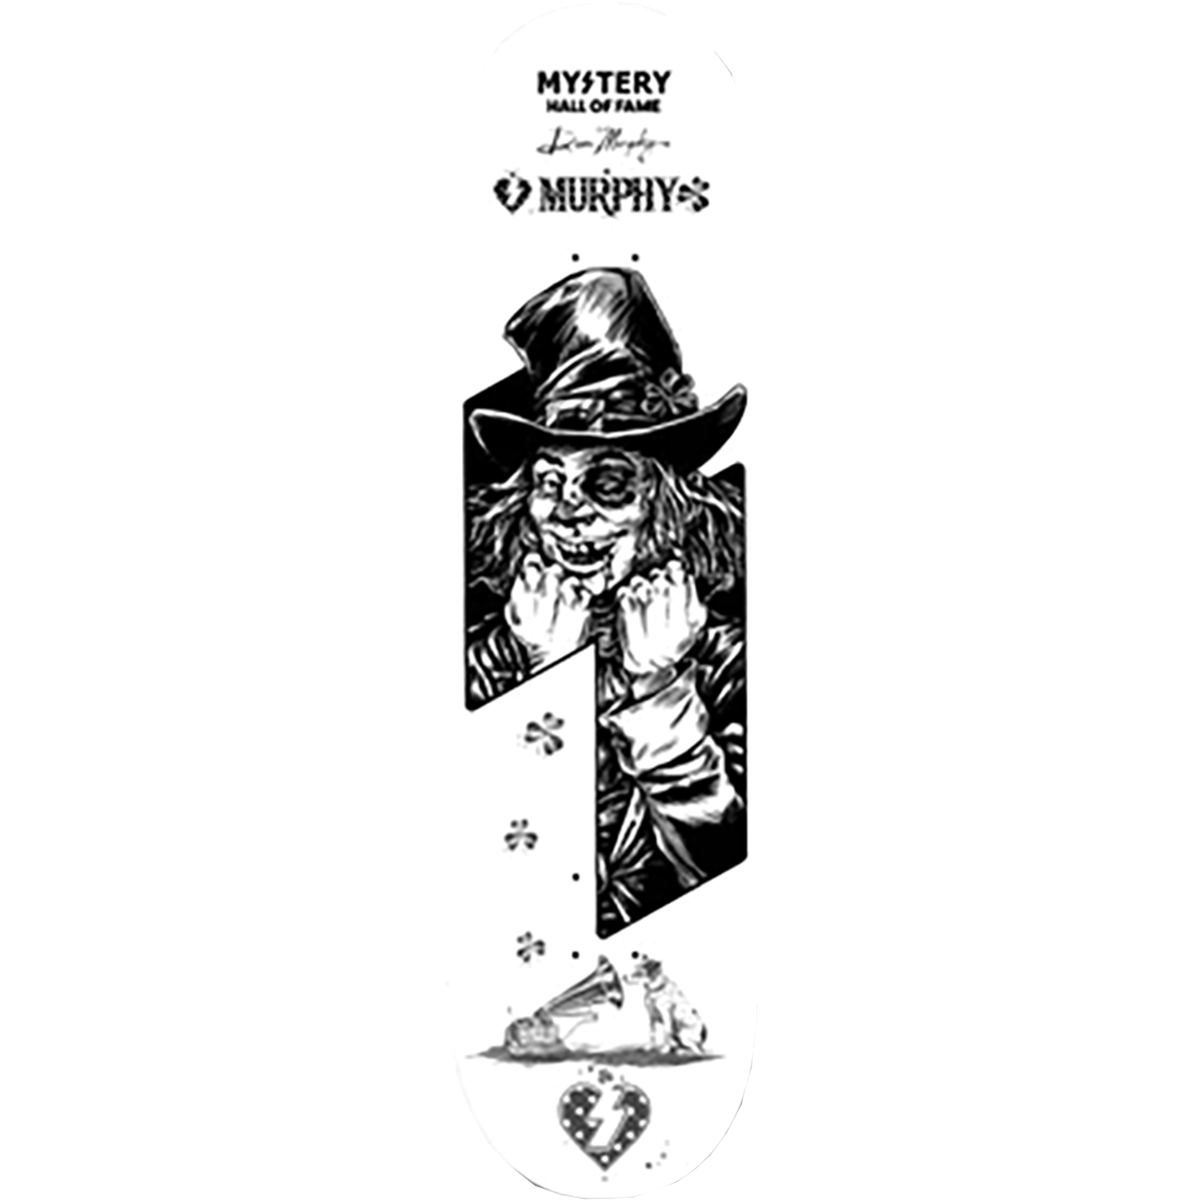 Mystery Murphy Hof Skateboard Deck -8.25 White DECK ONLY